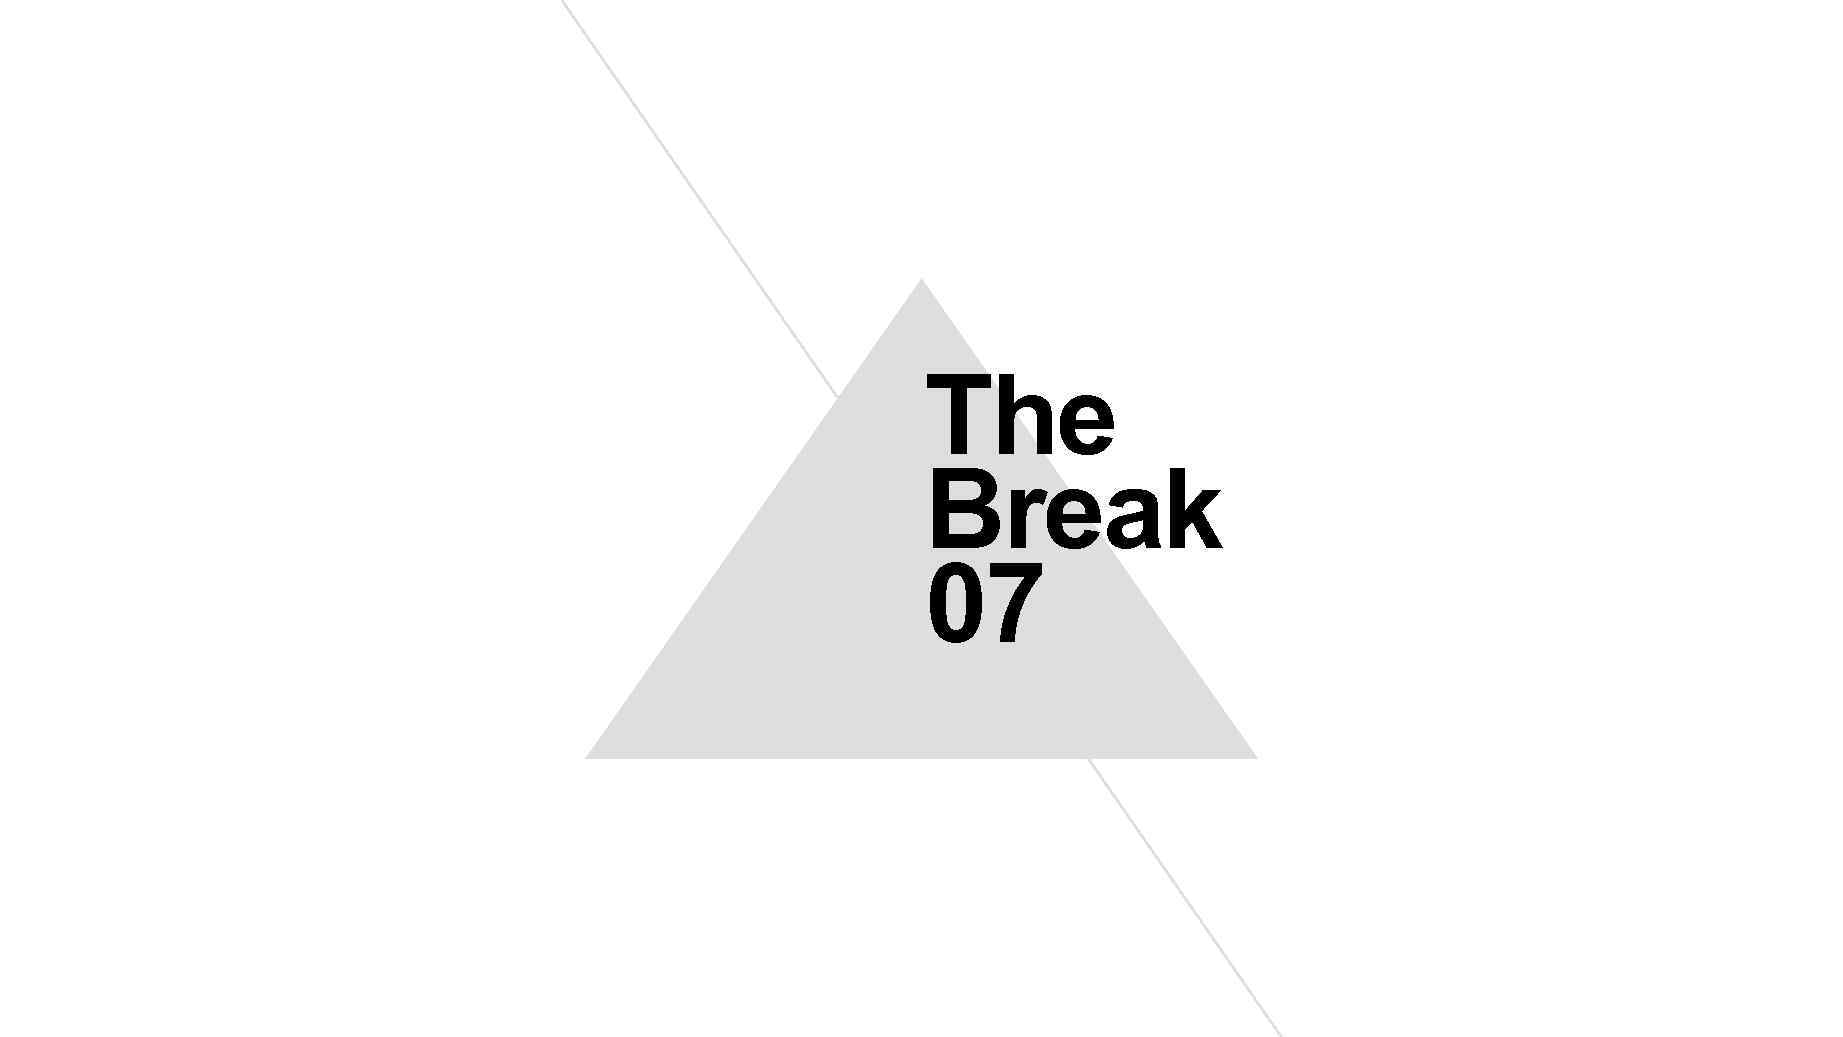 The Break 07 